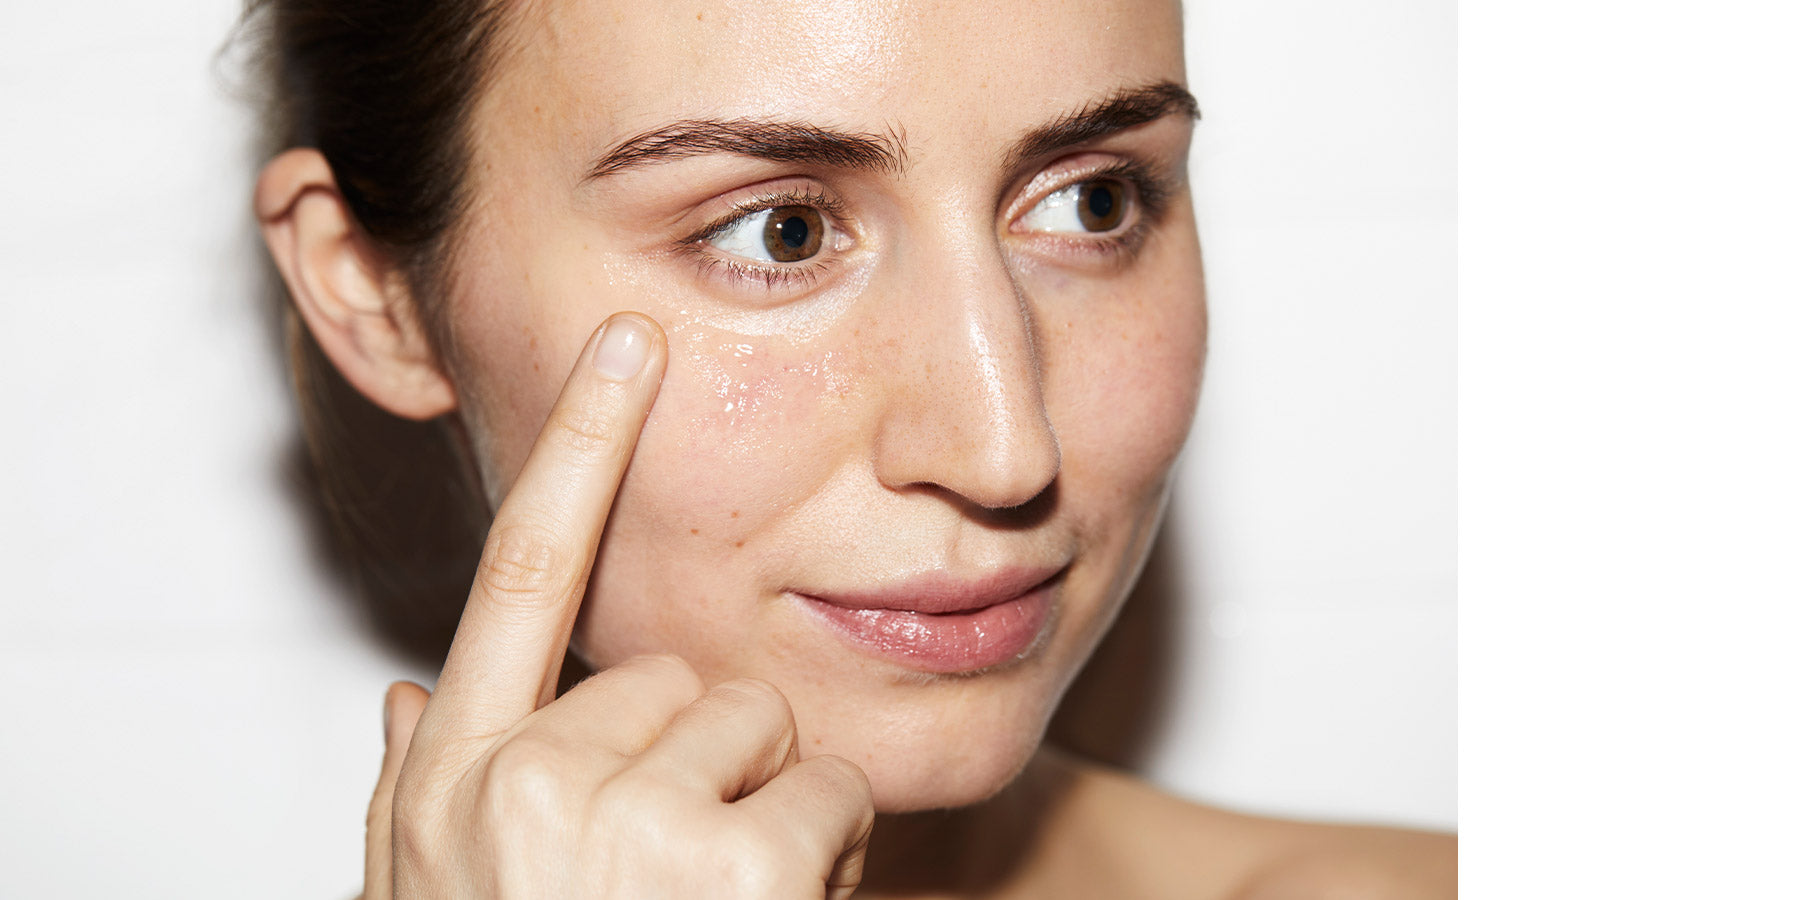 Is skin becoming more sensitive?